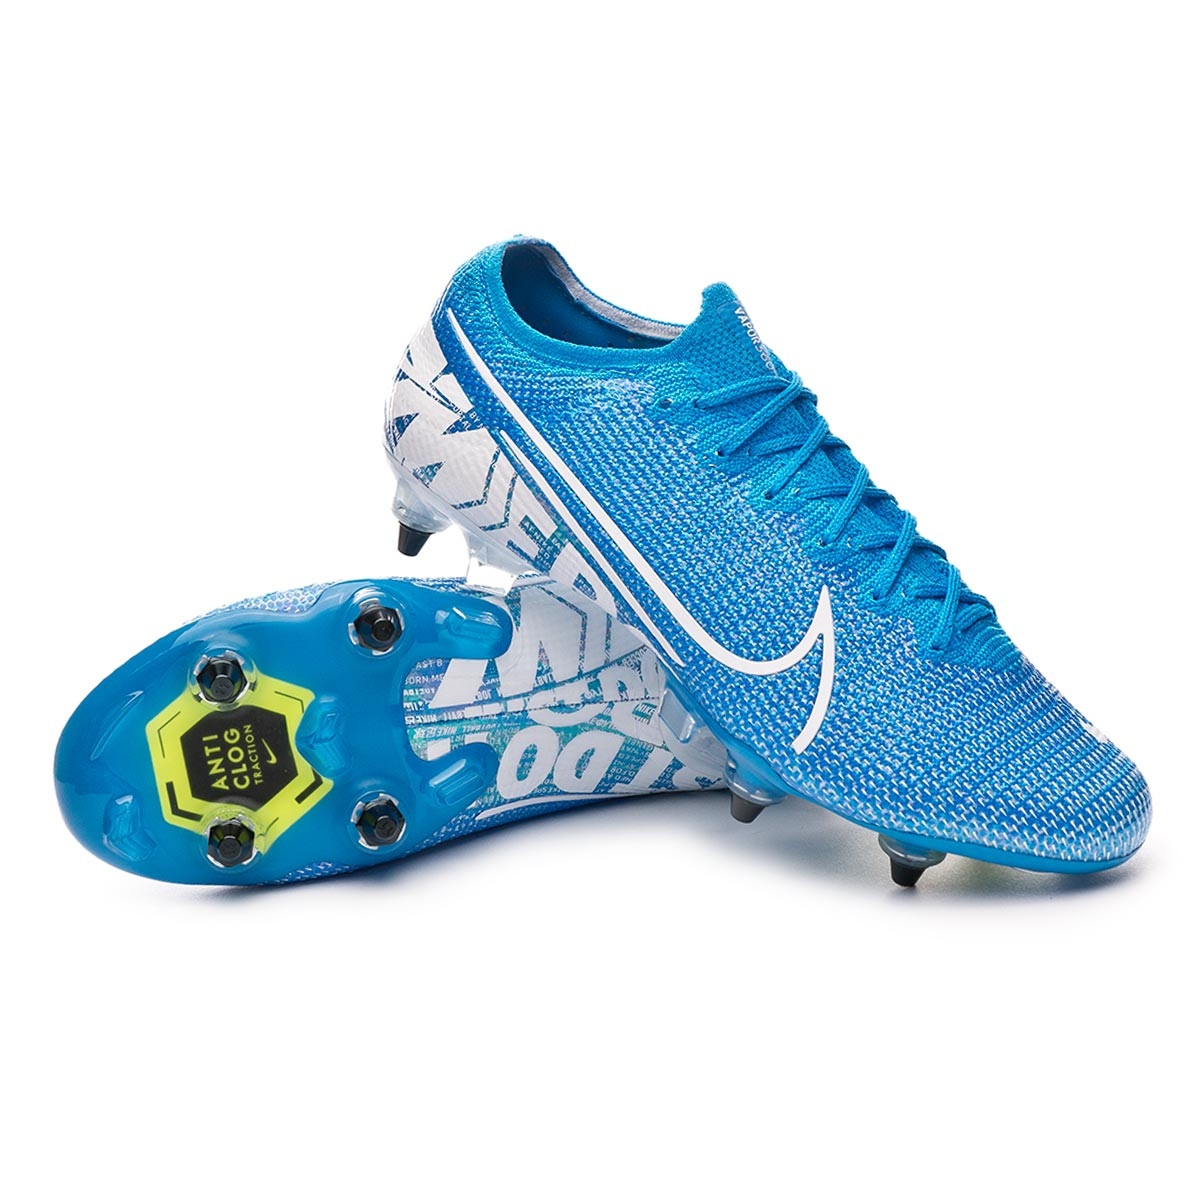 Football Boots Nike Mercurial Vapor XIII Elite ACC SG-Pro Blue  hero-White-Obsidian - Football store Fútbol Emotion